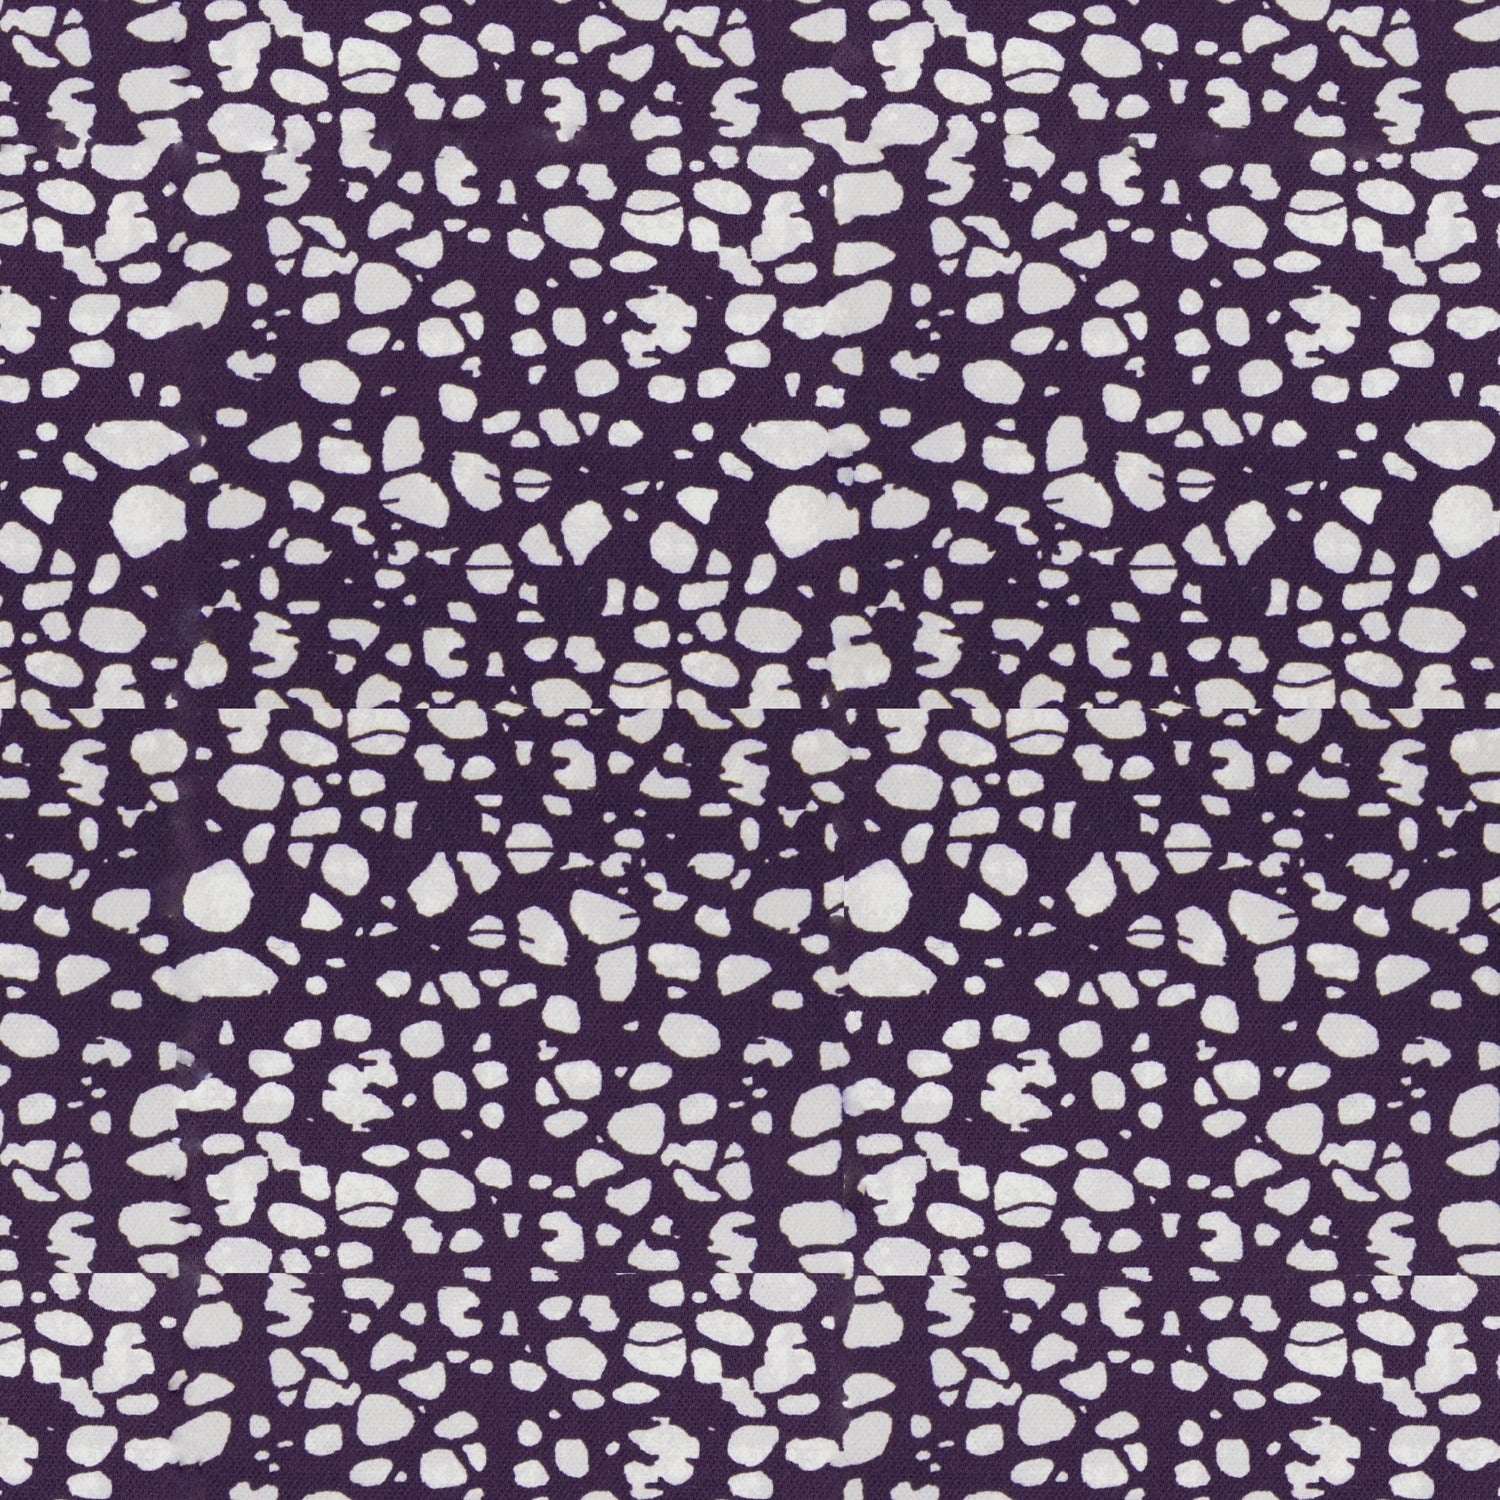 Detail of fabric in a batik splatter print in cream on a dark purple field.